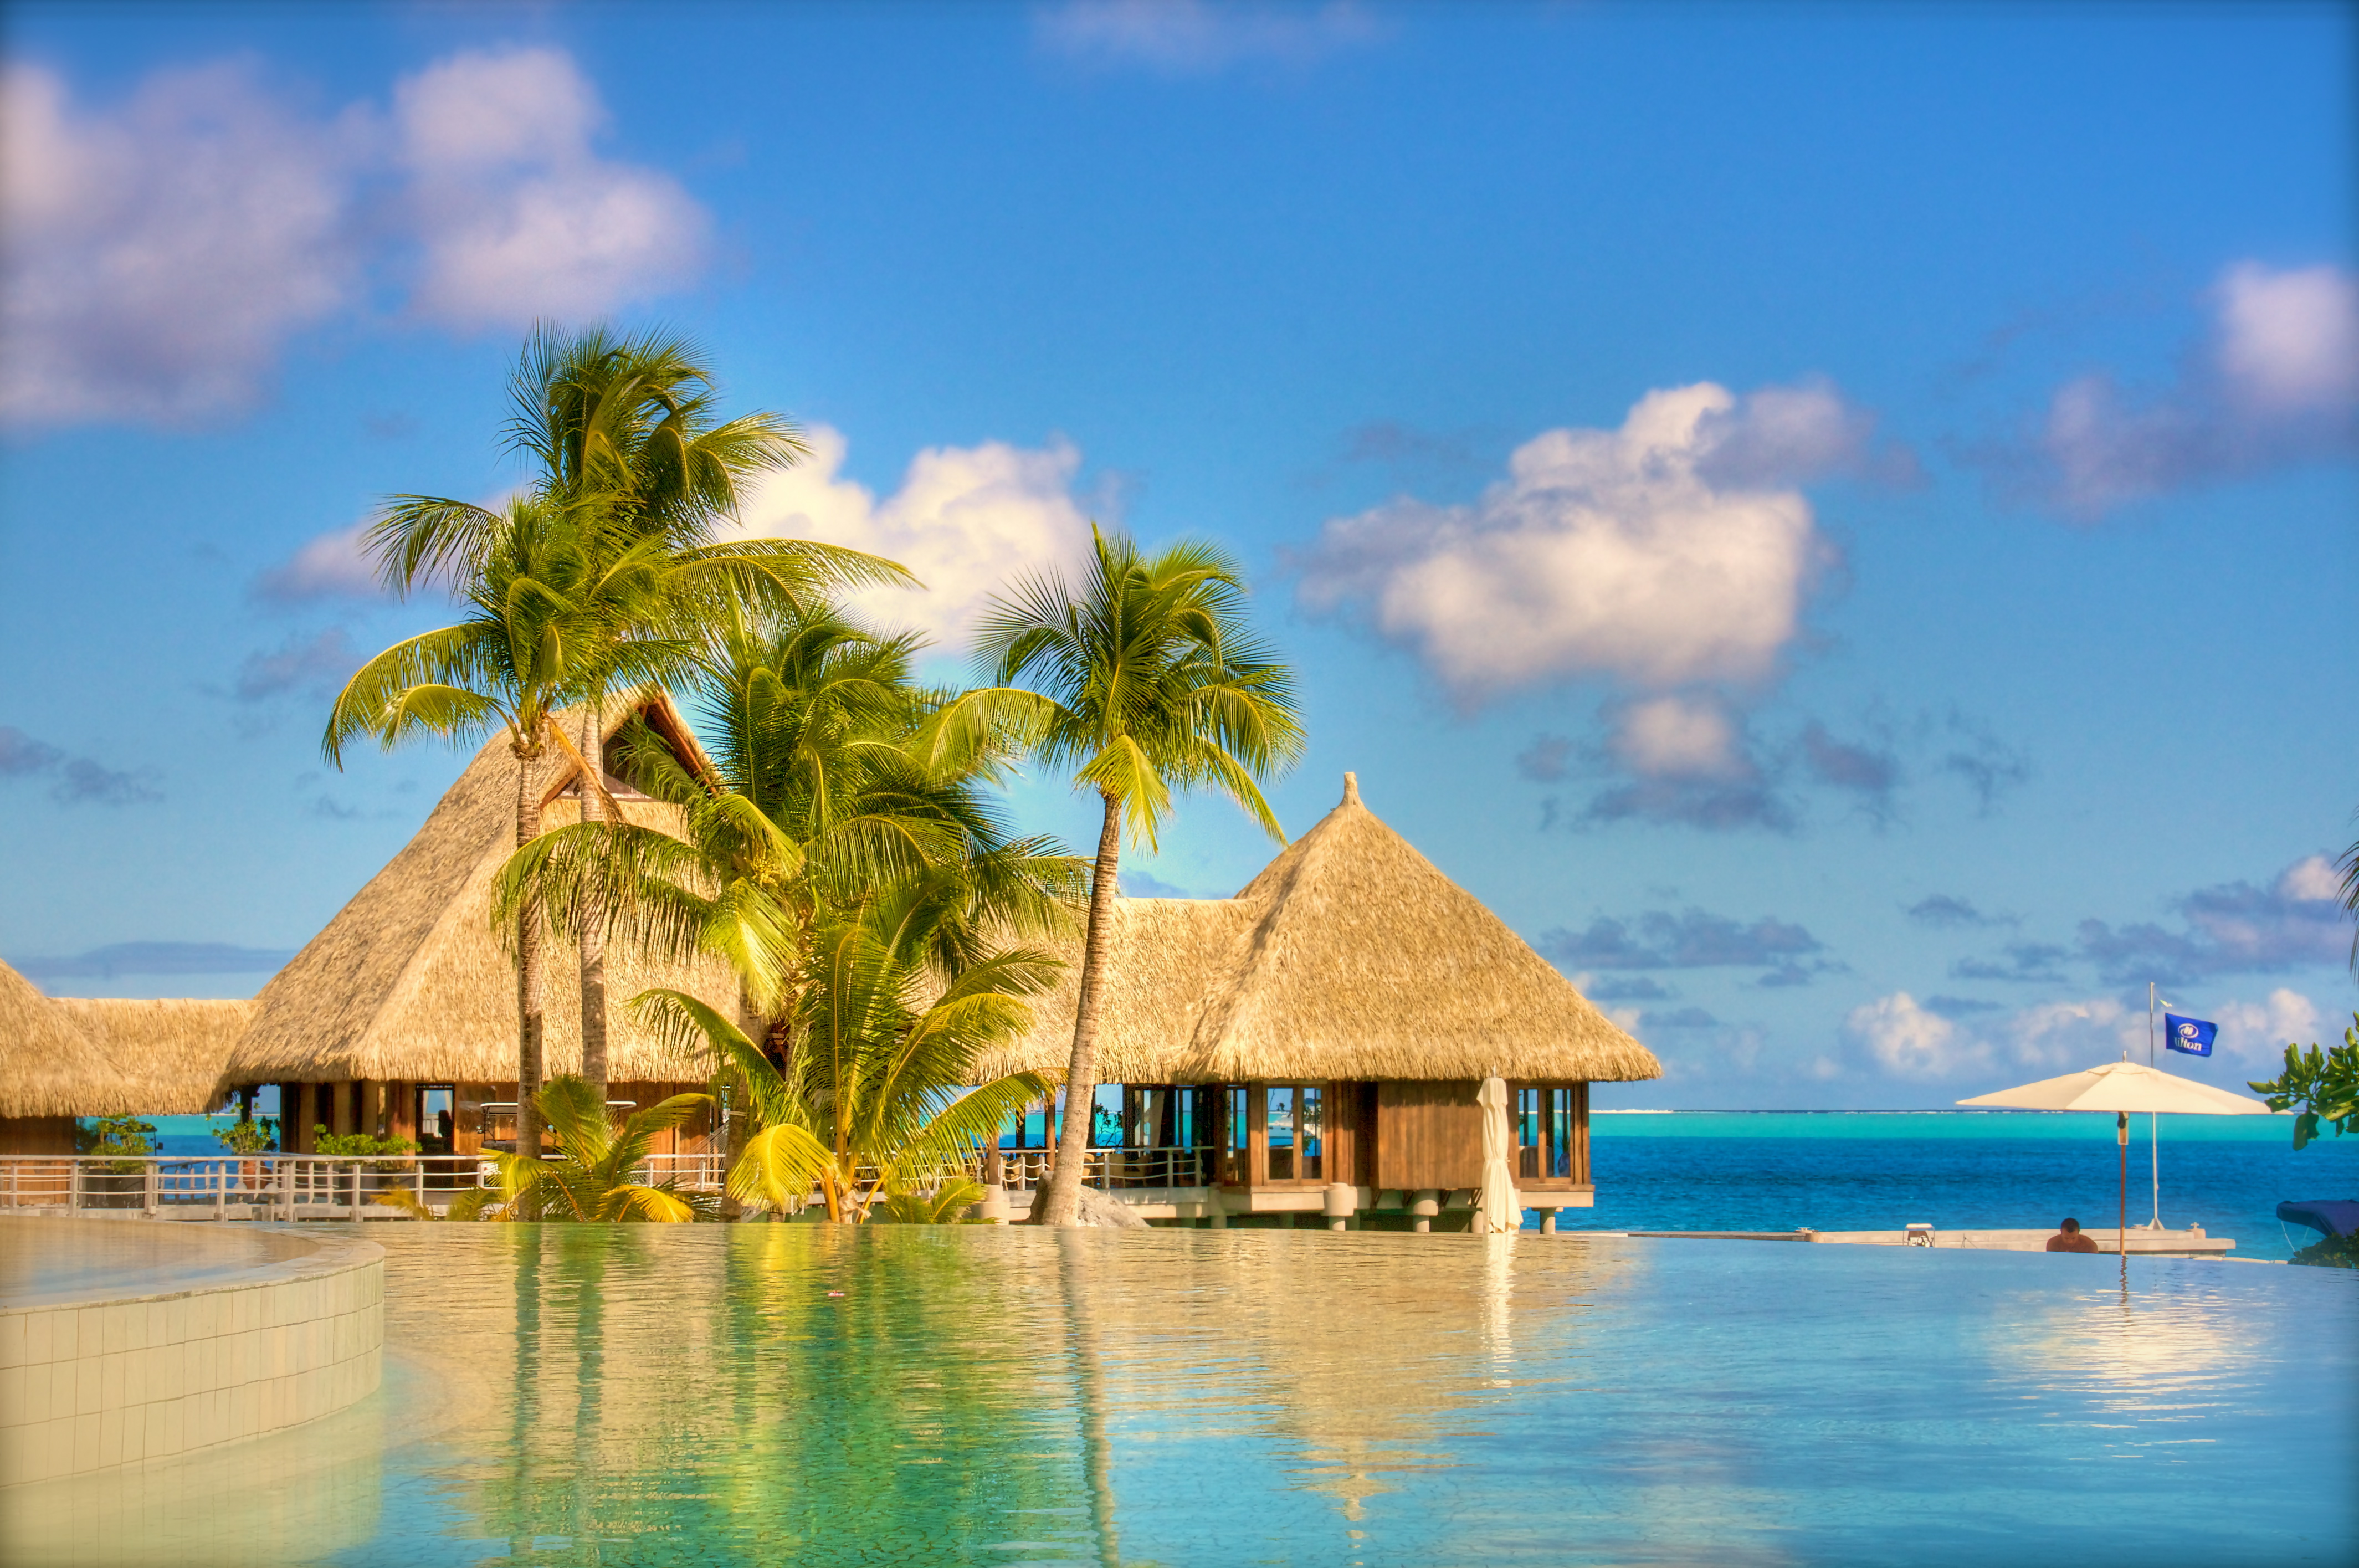 man made, resort, beach, bungalow, palm tree, tropical